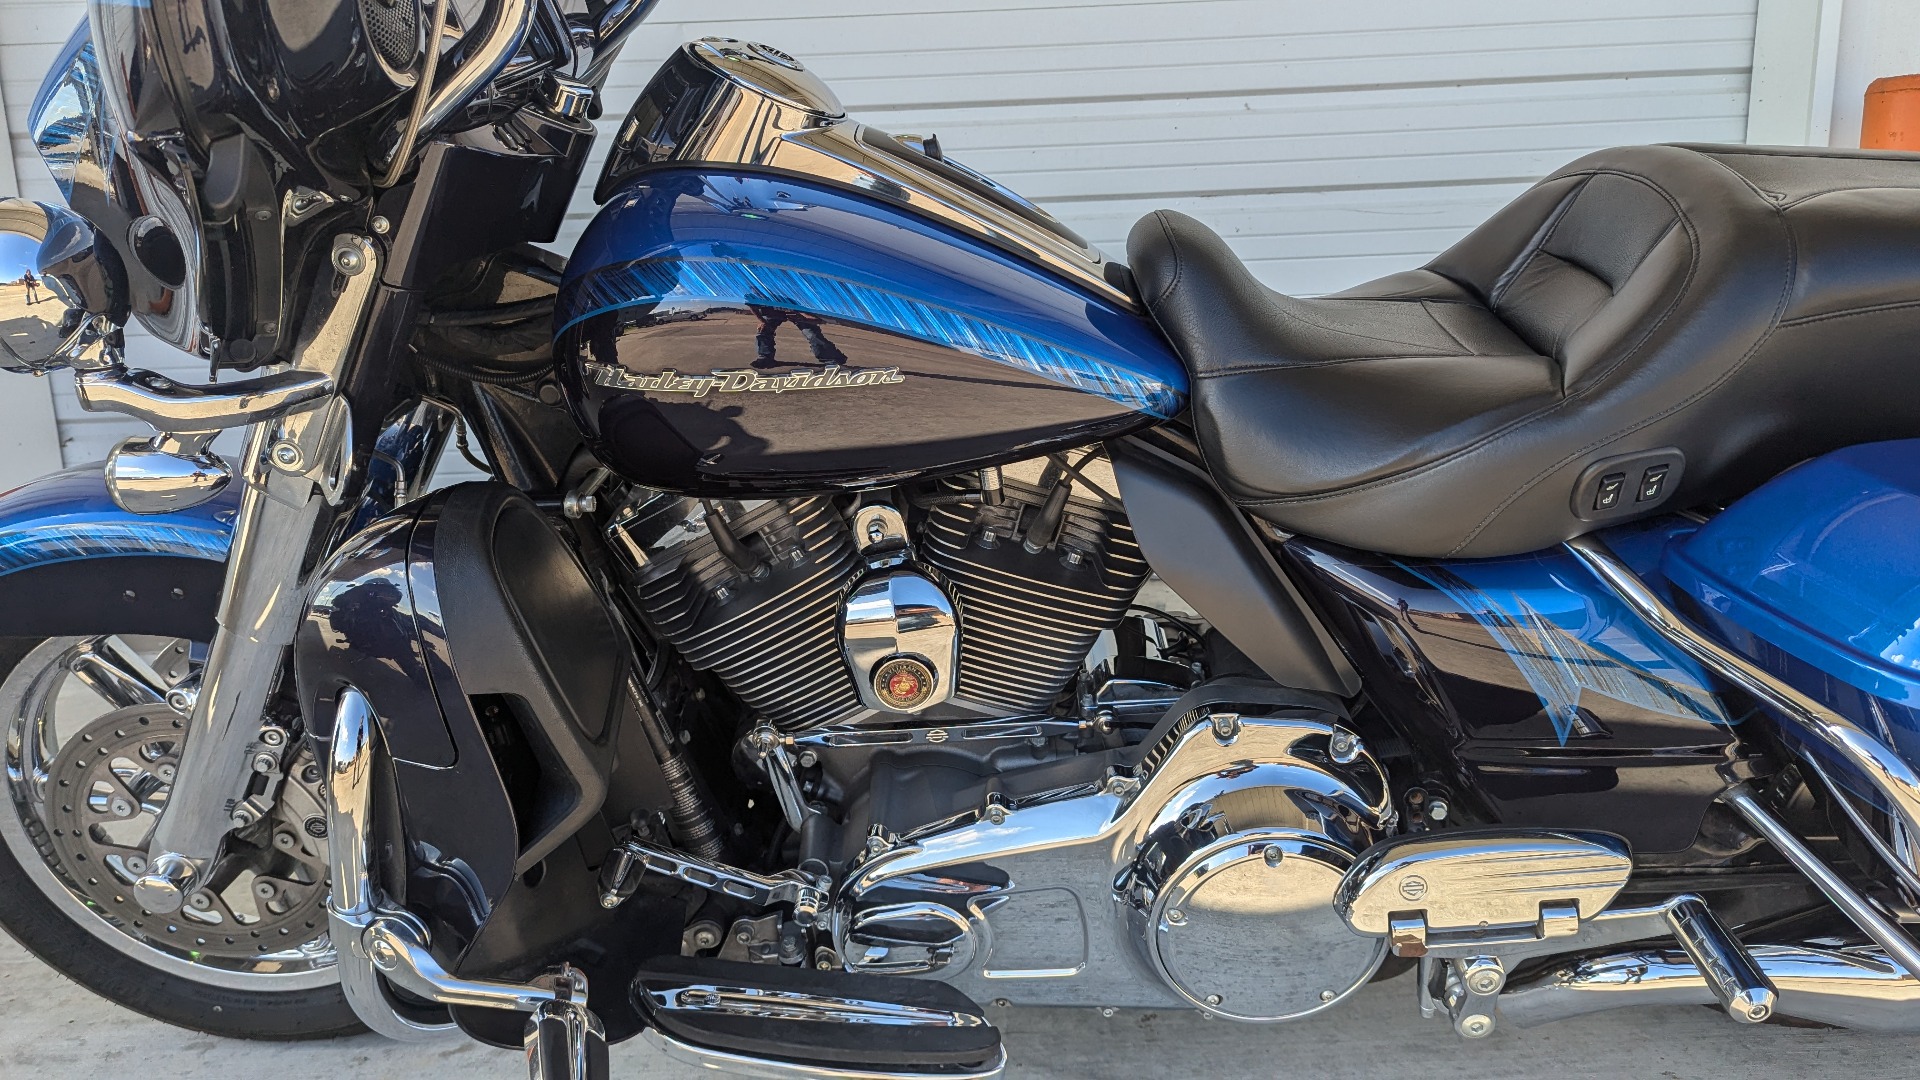 2014 Harley Davidson CVO Limited for sale in dallas - Photo 7